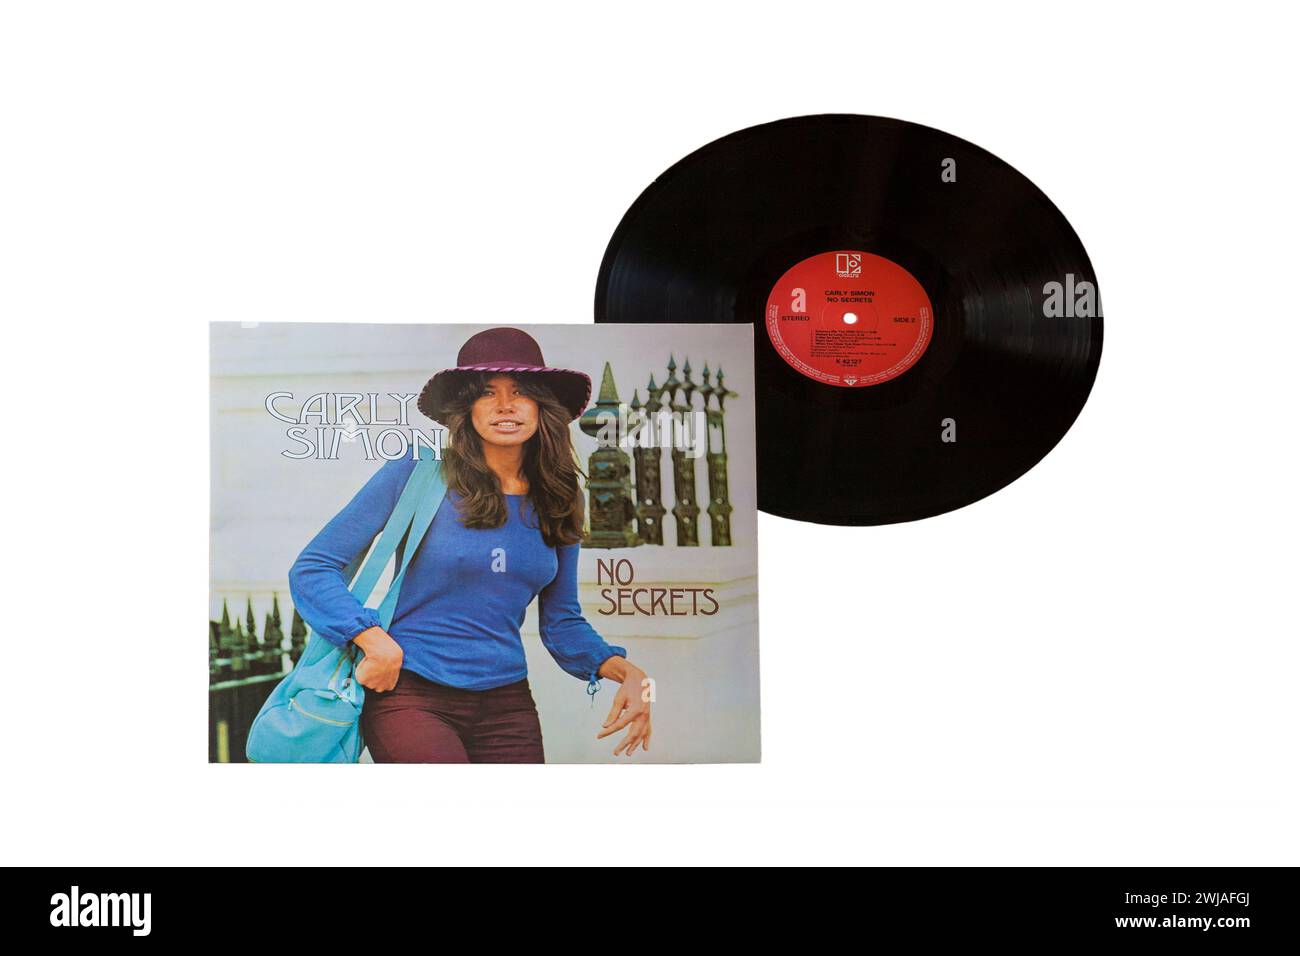 Carly Simon No Secrets vinyl record album LP cover isolated on white background - 1972 Stock Photo